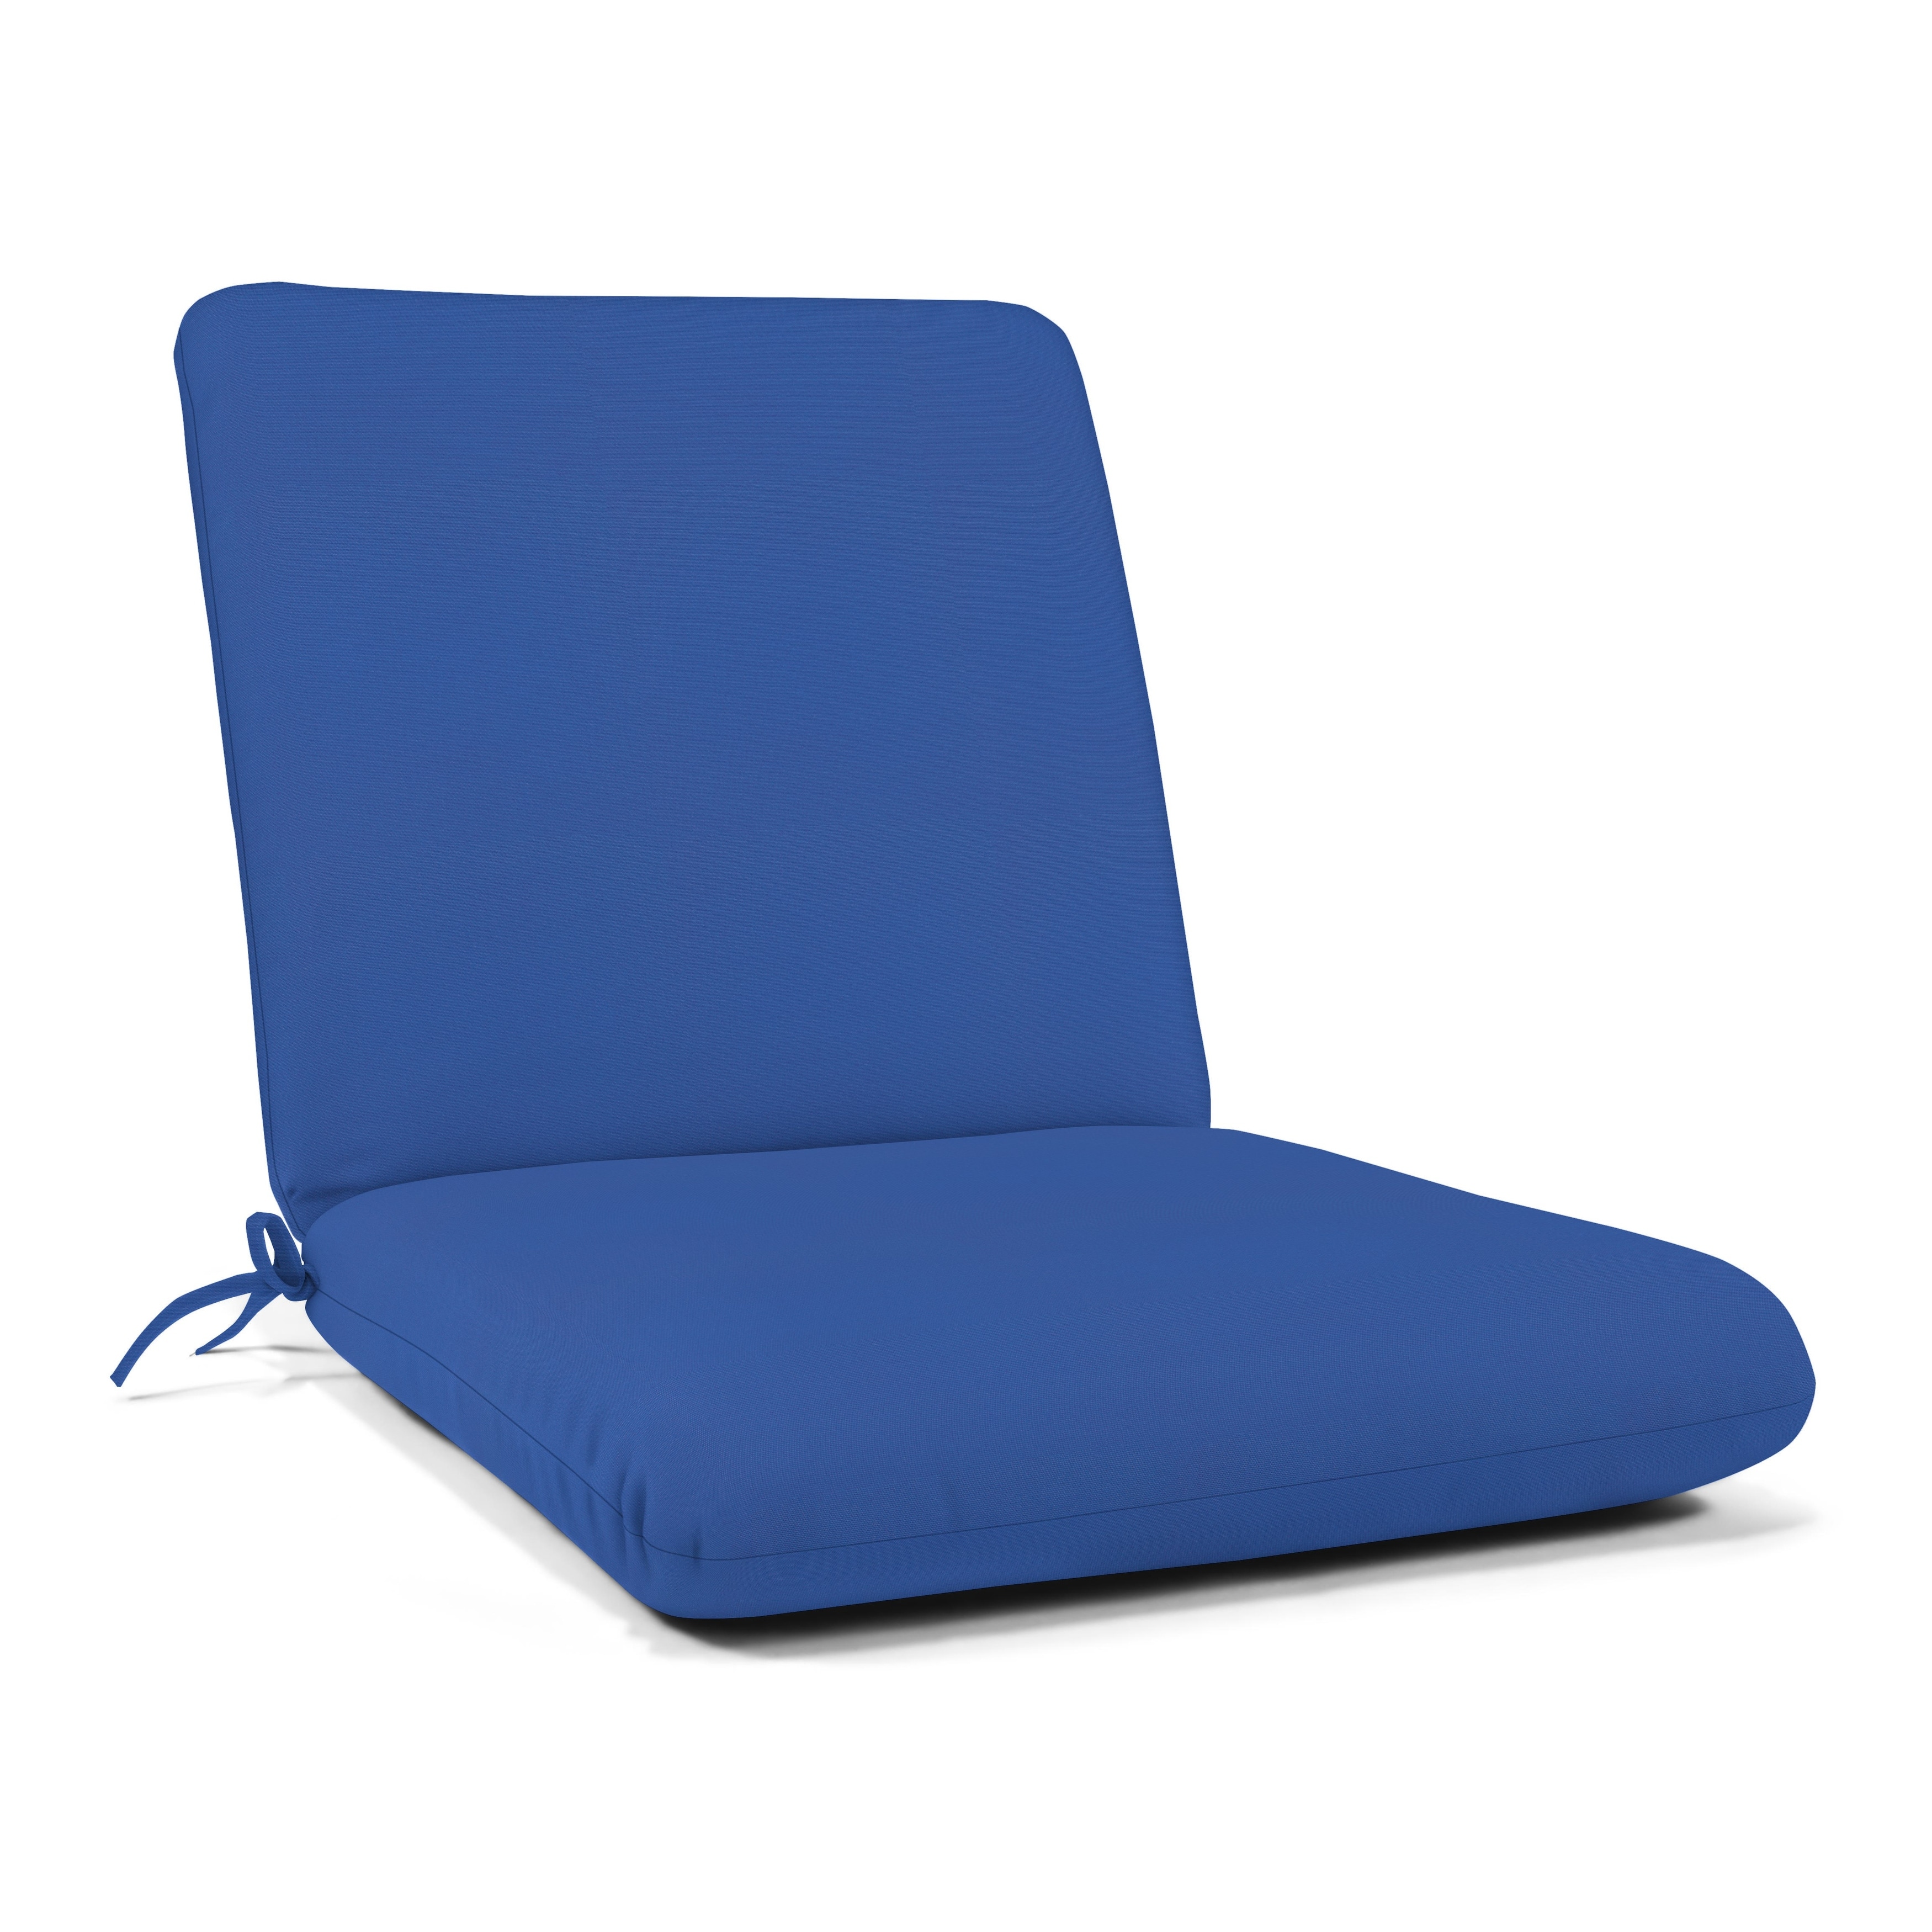 Green Chair Cushion x 2 In D x 18 In Casual Cushion 19 In H W 